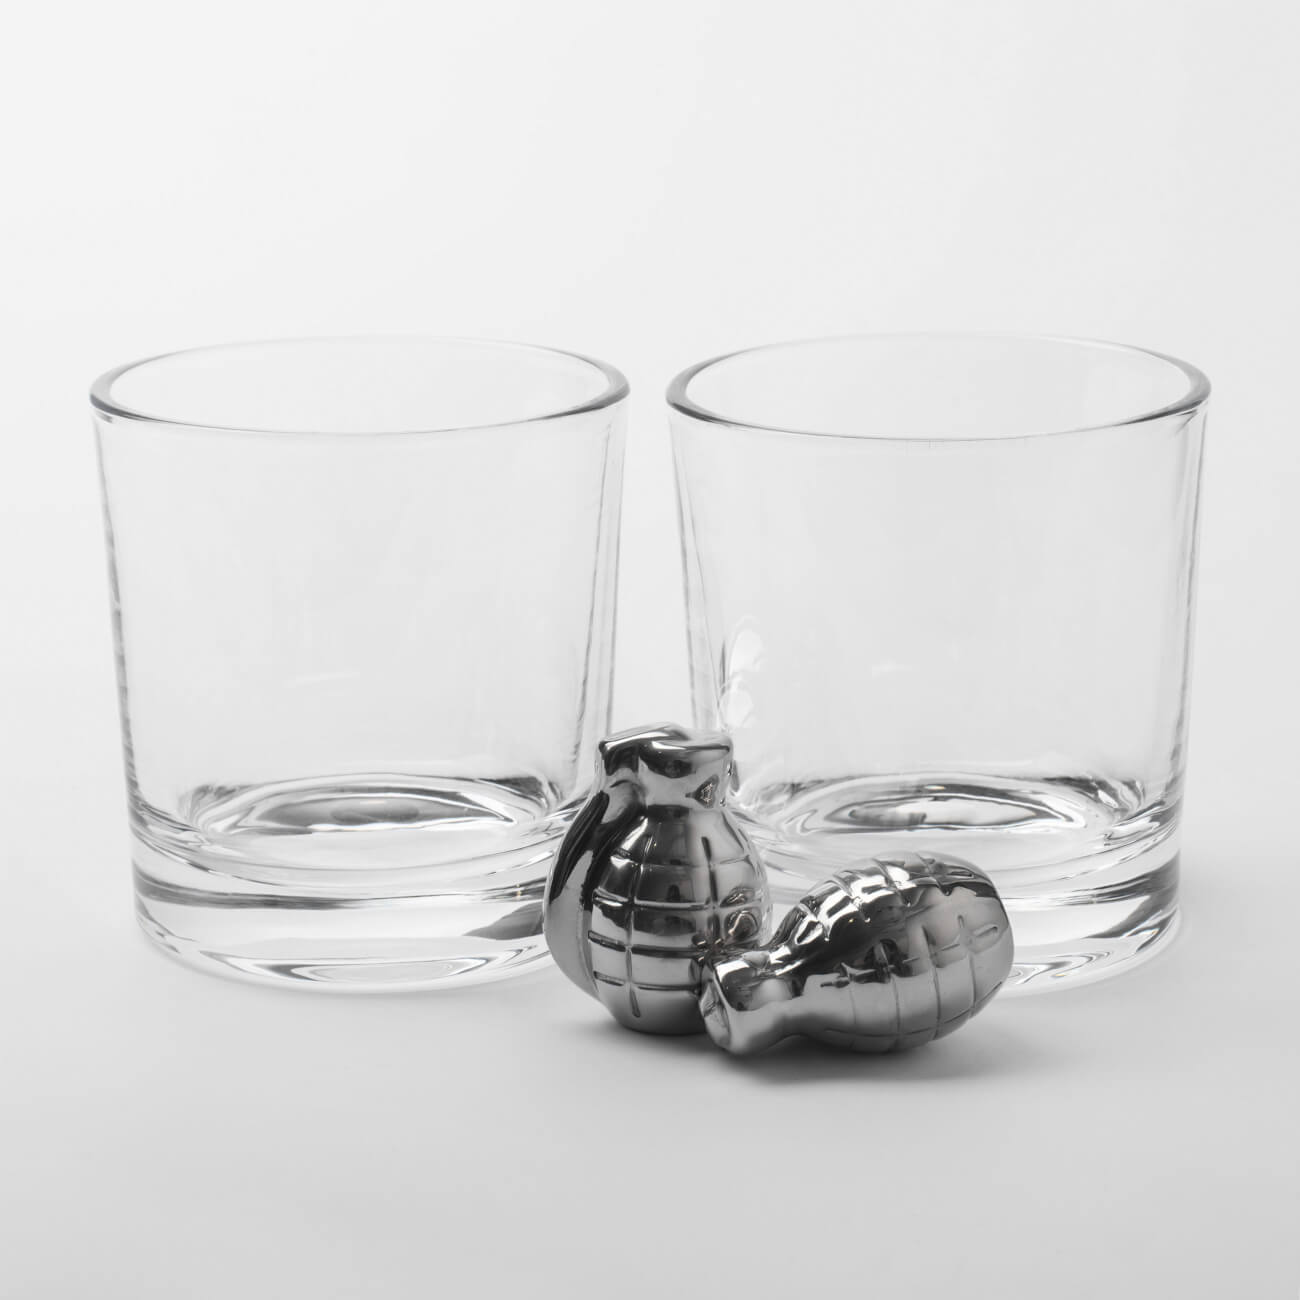 Набор для виски, 2 перс, 4 пр, стаканы/кубики, стекло/сталь, Граната, Bullet набор для виски 2 перс 6 пр стаканы кубики стекло р мрамор zero